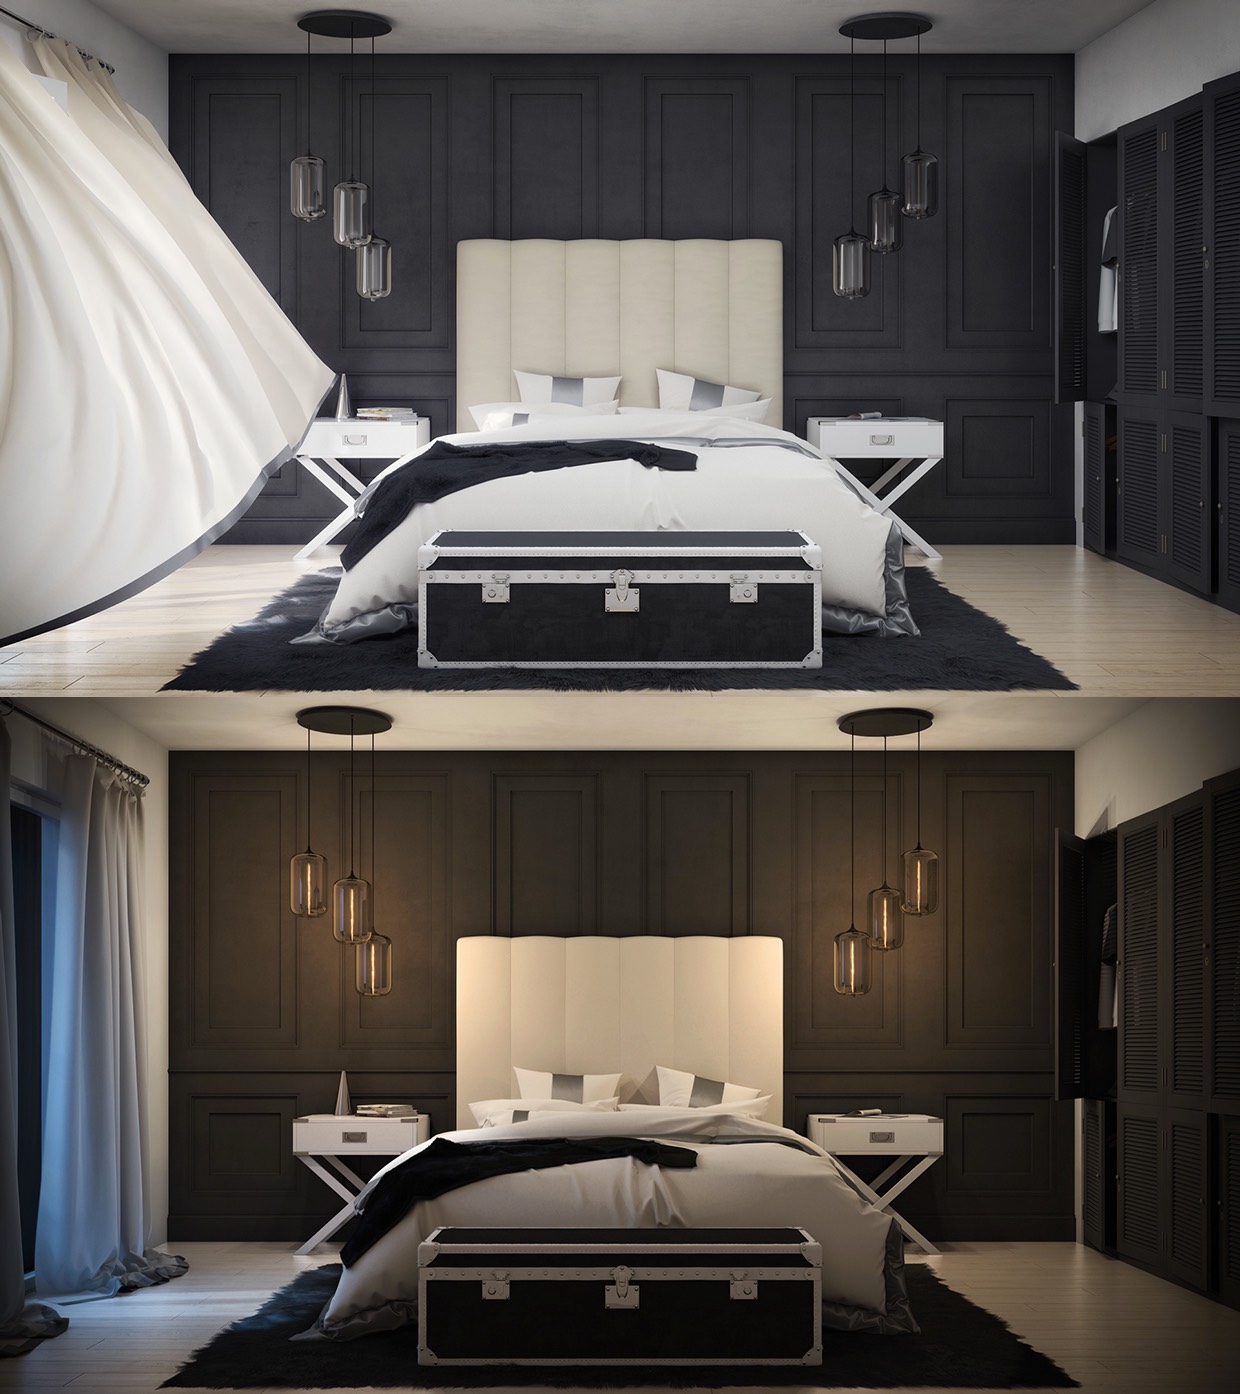 Dark bedroom theme "width =" 1240 "height =" 1394 "srcset =" https://mileray.com/wp-content/uploads/2020/05/1588510448_494_Dark-Bedroom-Design-Ideas-and-Inspiration-To-Get-The-Relax.jpg 1240w, https://mileray.com/ wp -content / uploads / 2016/07 / CG-Wisdom-267x300.jpg 267w, https://mileray.com/wp-content/uploads/2016/07/CG-Wisdom-768x863.jpg 768w, https: // myfashionos .com / wp-content / uploads / 2016/07 / CG-Wisdom-911x1024.jpg 911w, https://mileray.com/wp-content/uploads/2016/07/CG-Wisdom-696x782.jpg 696w, https : //mileray.com/wp-content/uploads/2016/07/CG-Wisdom-1068x1201.jpg 1068w, https://mileray.com/wp-content/uploads/2016/07/CG-Wisdom-374x420. jpg 374w "sizes =" (maximum width: 1240px) 100vw, 1240px